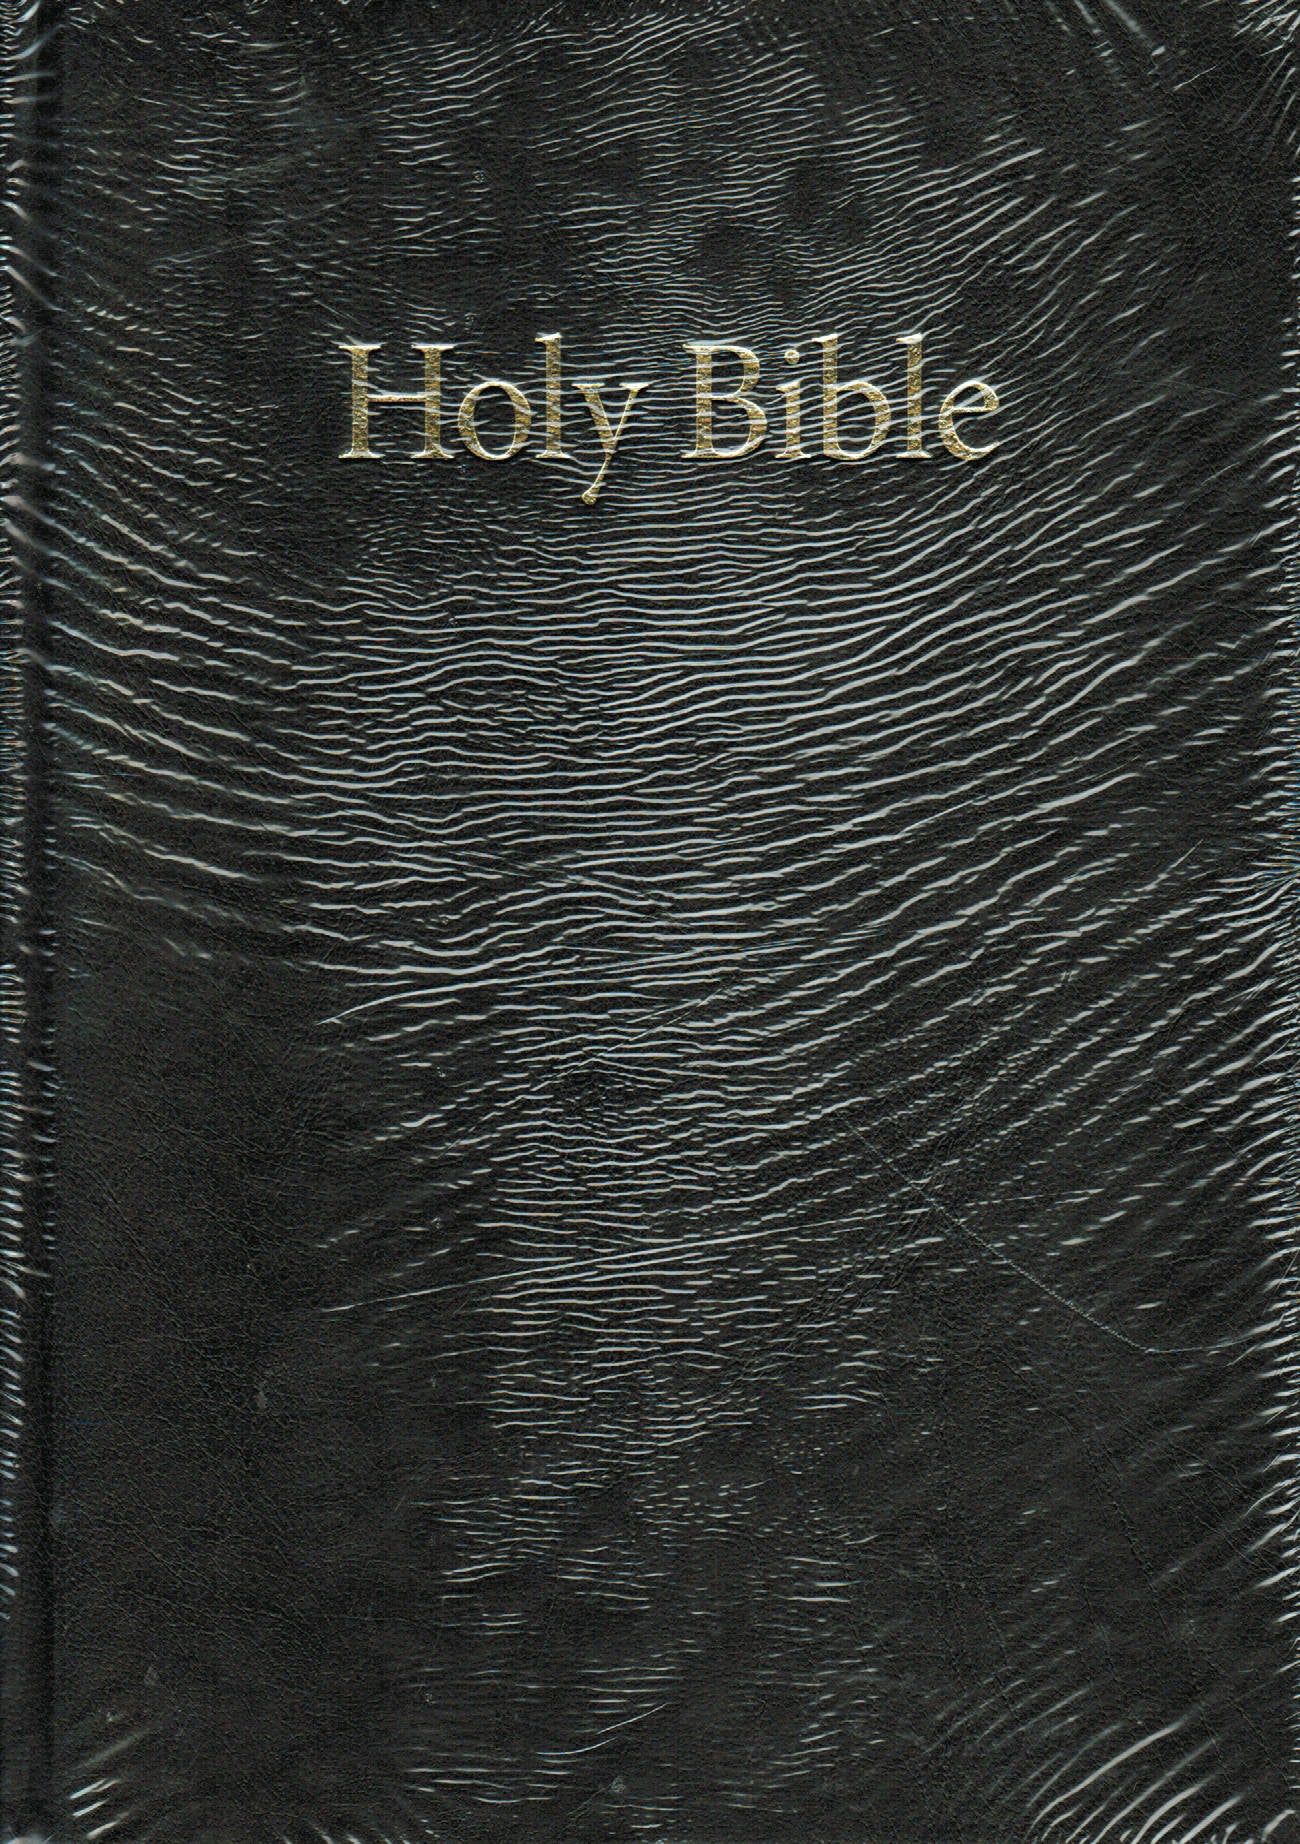 KJV Bible - TBS Windsor Large Print (Hardcover)